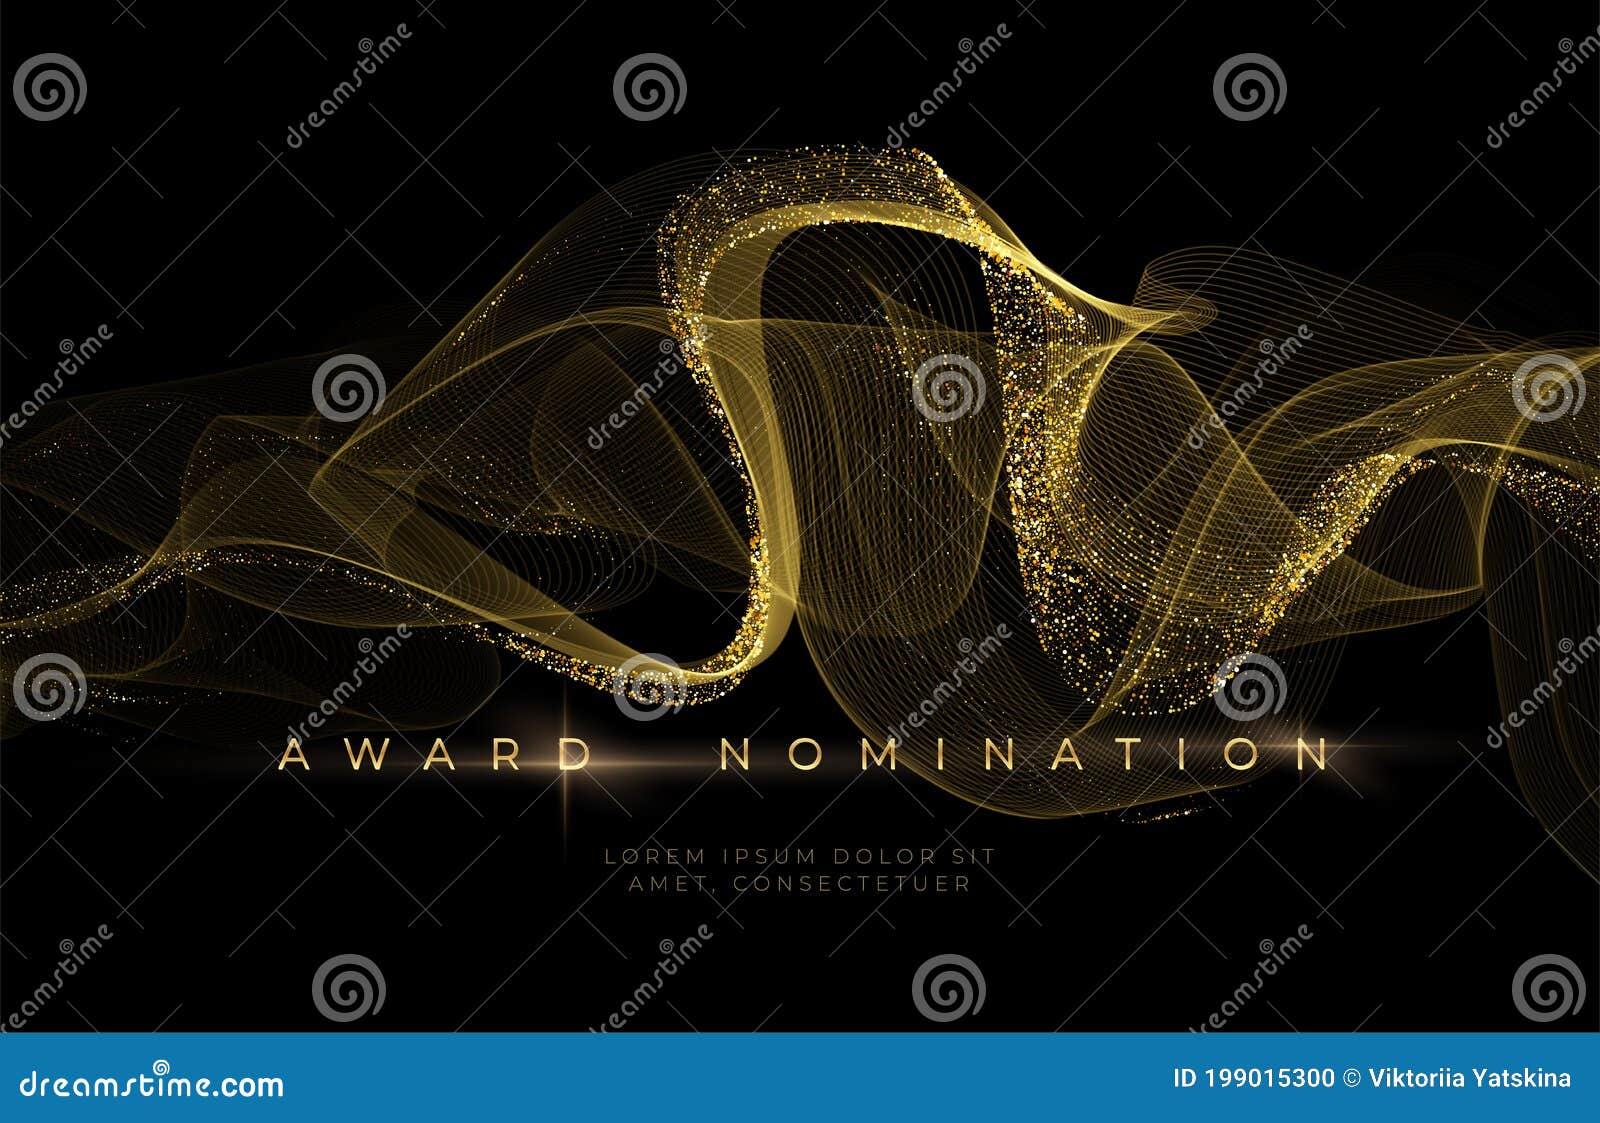 awards ceremony luxurious black background with golden glitter waves. award nomination background.  